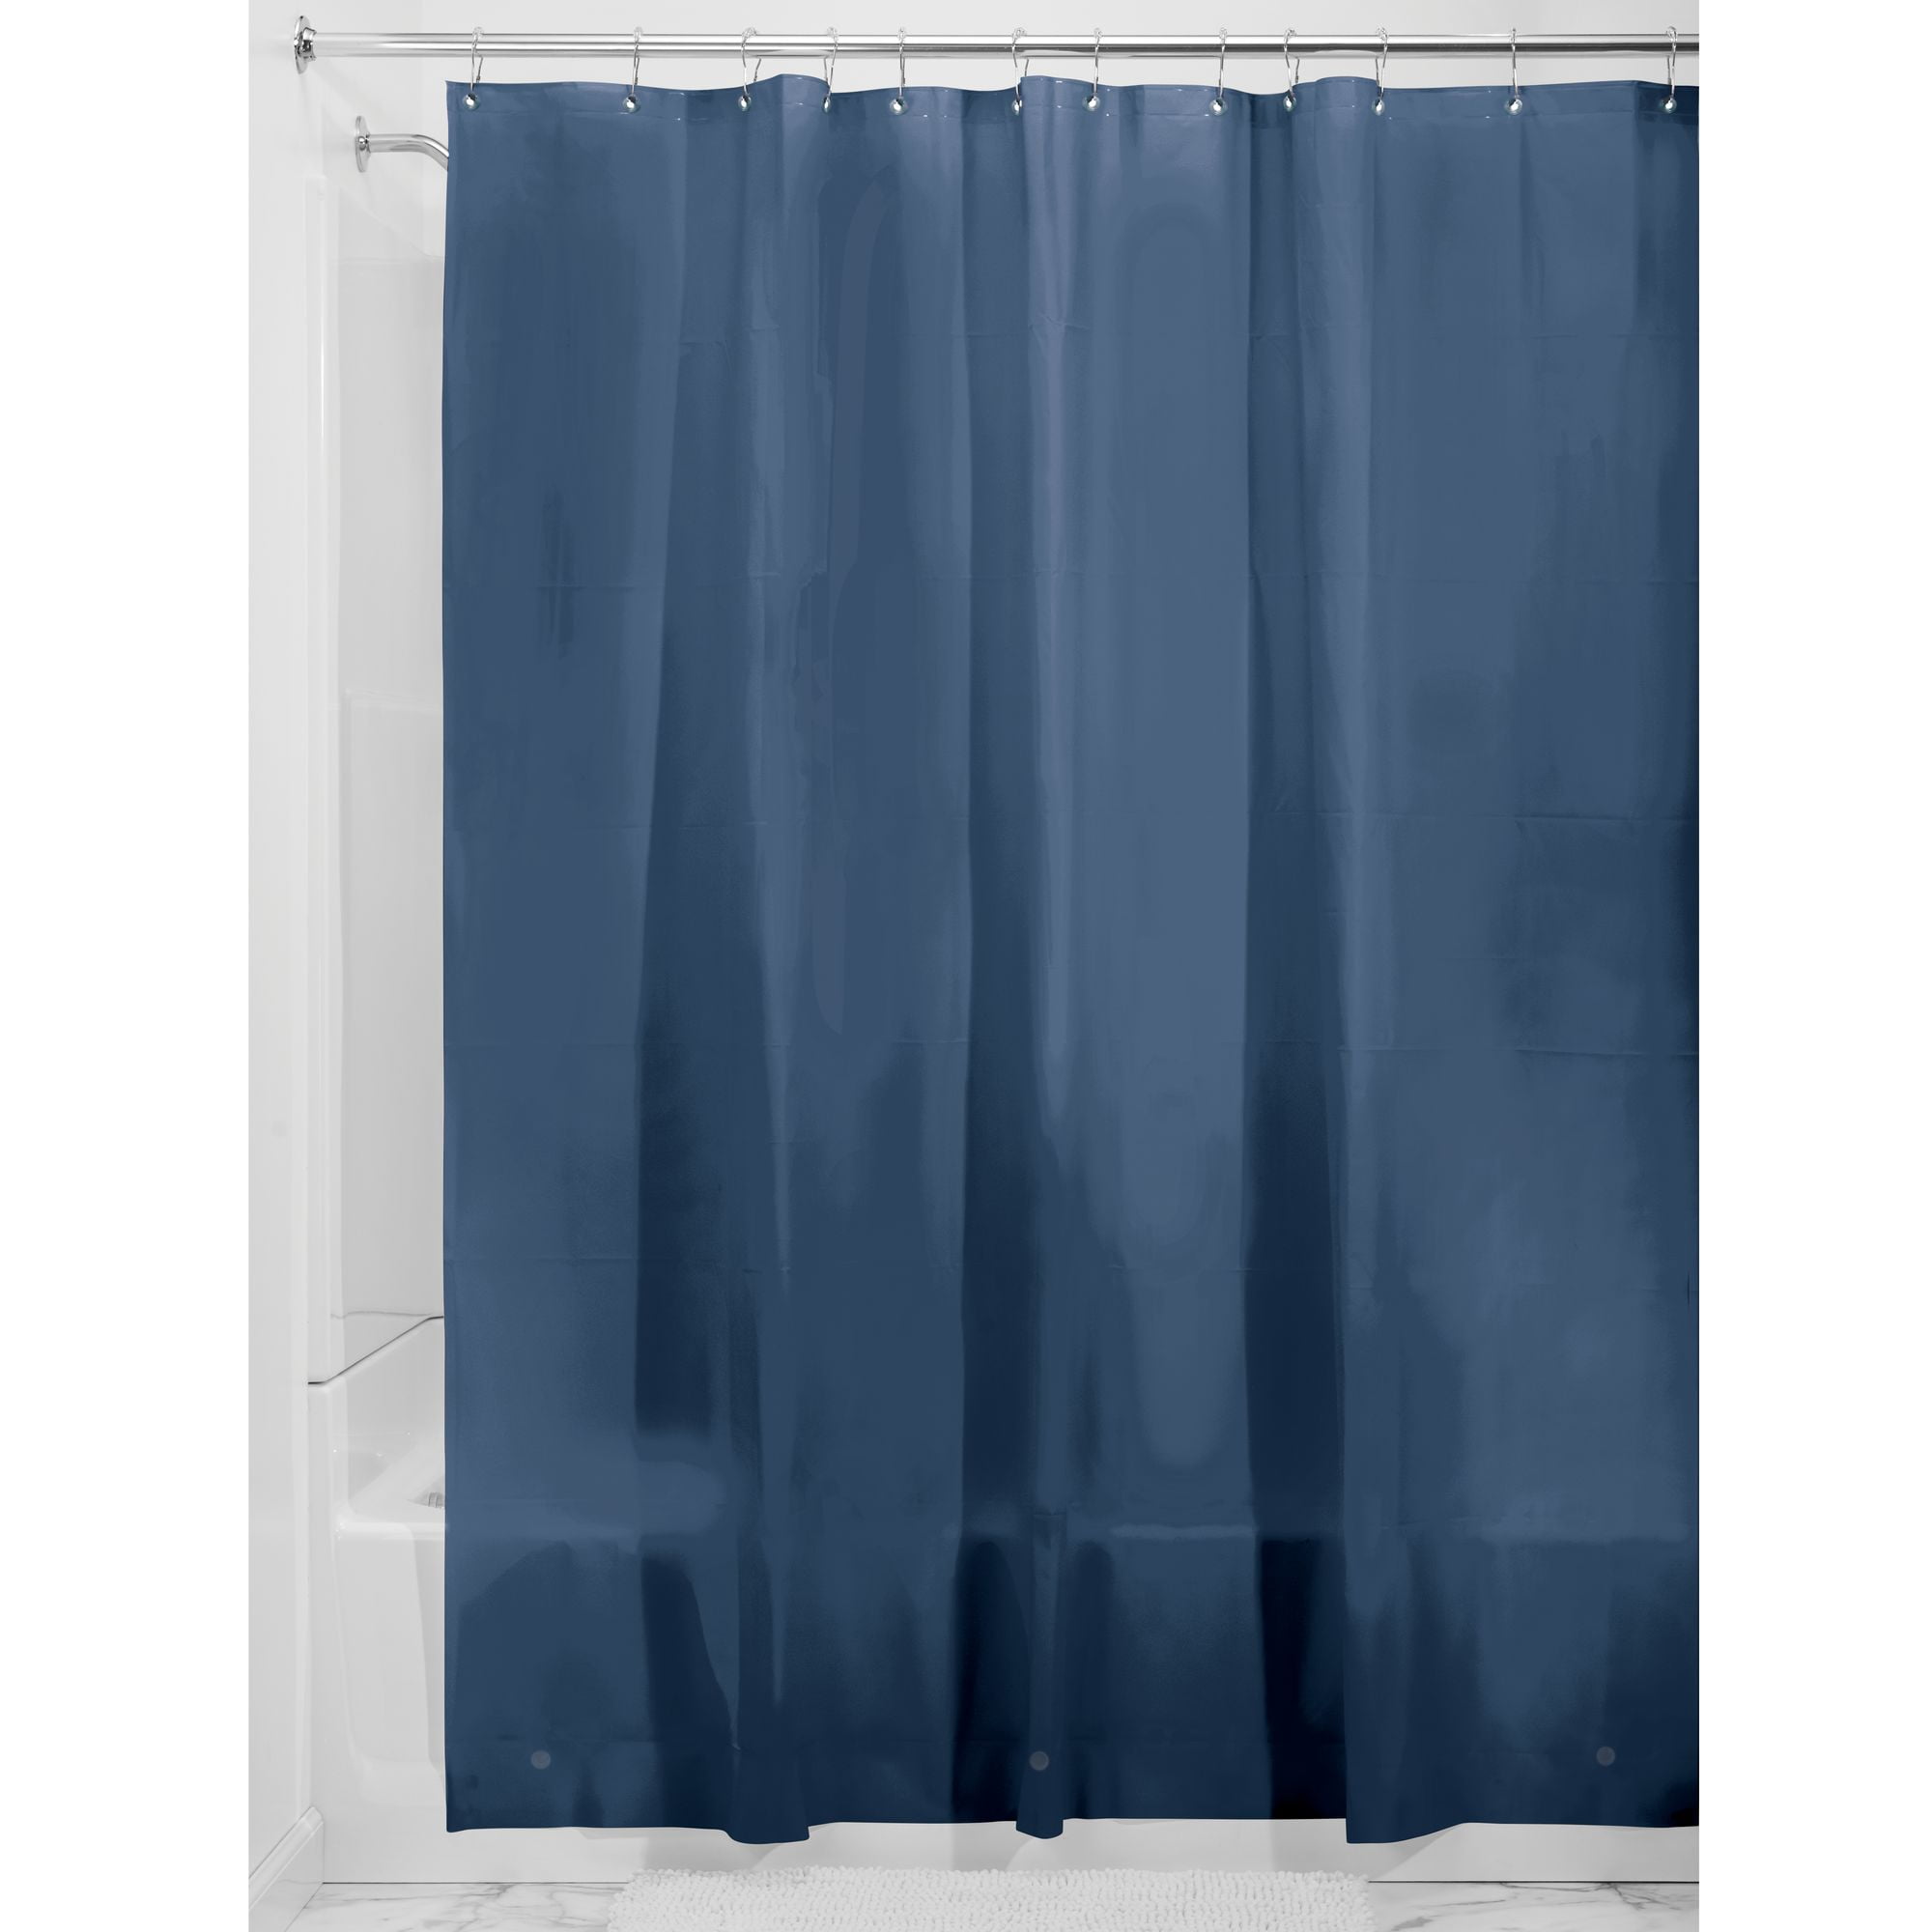 Peva 3 Gauge Shower Curtain Liner, 72×84 Shower Curtain Liner